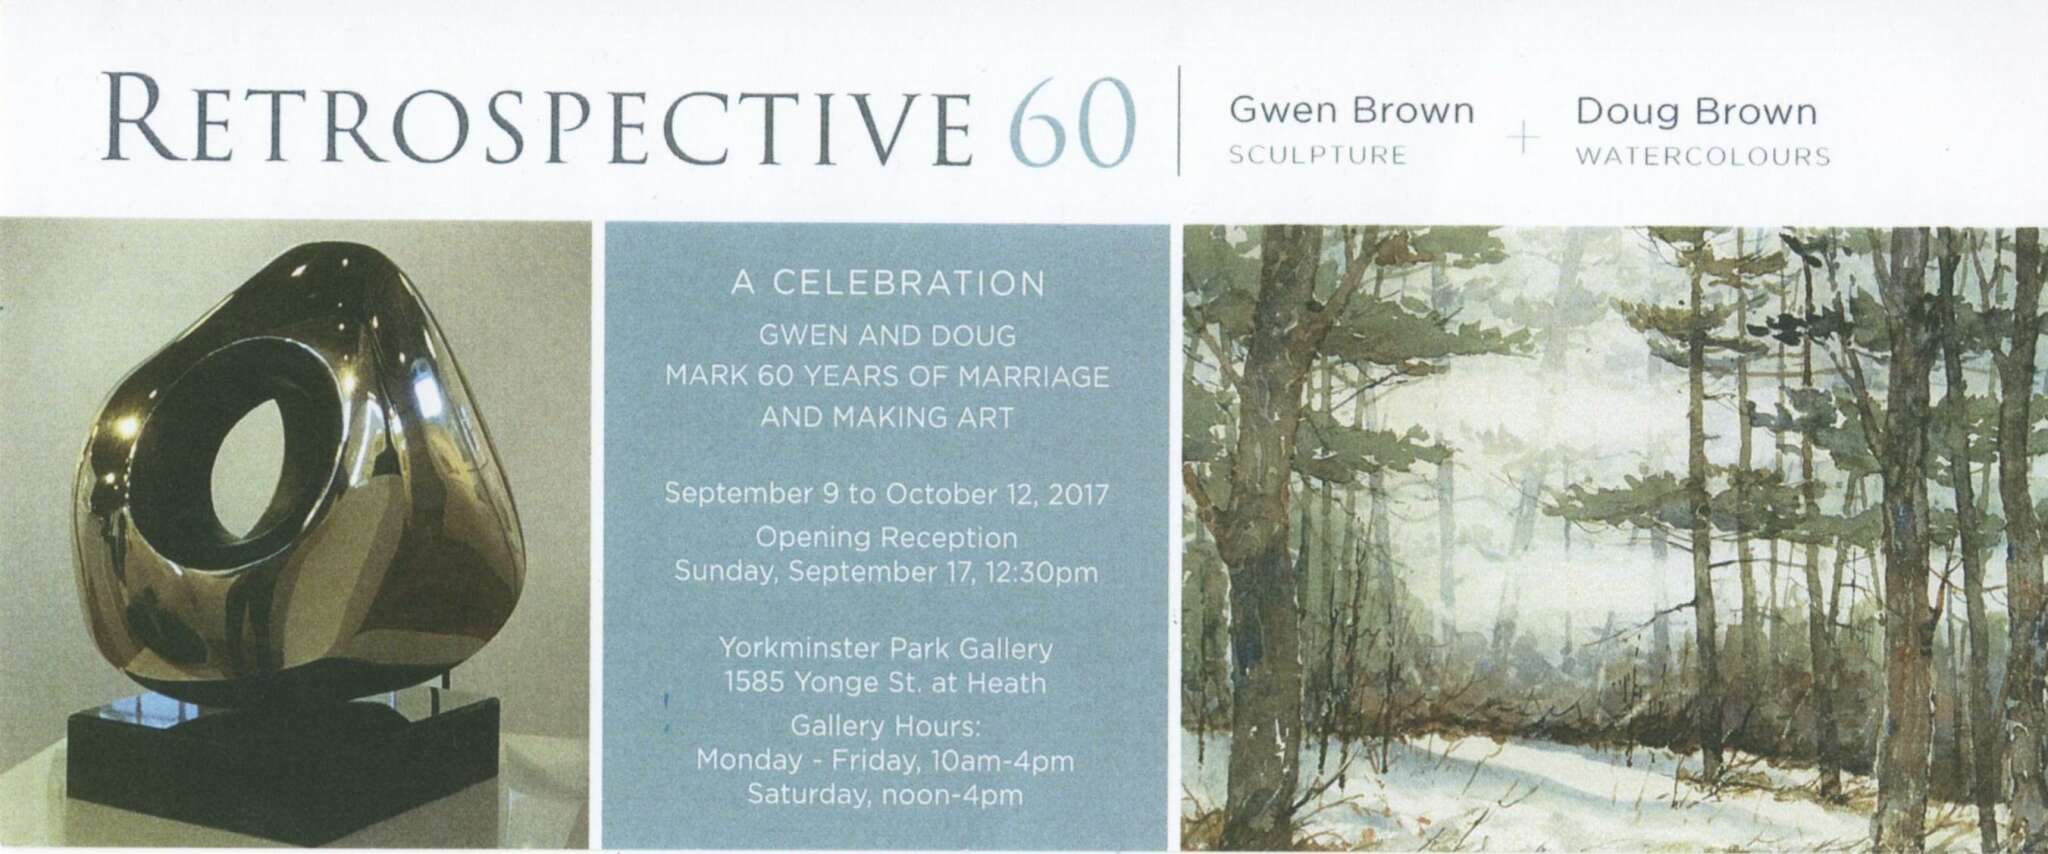 RETROSPECTIVE 60  Gwen Brown + Doug Brown